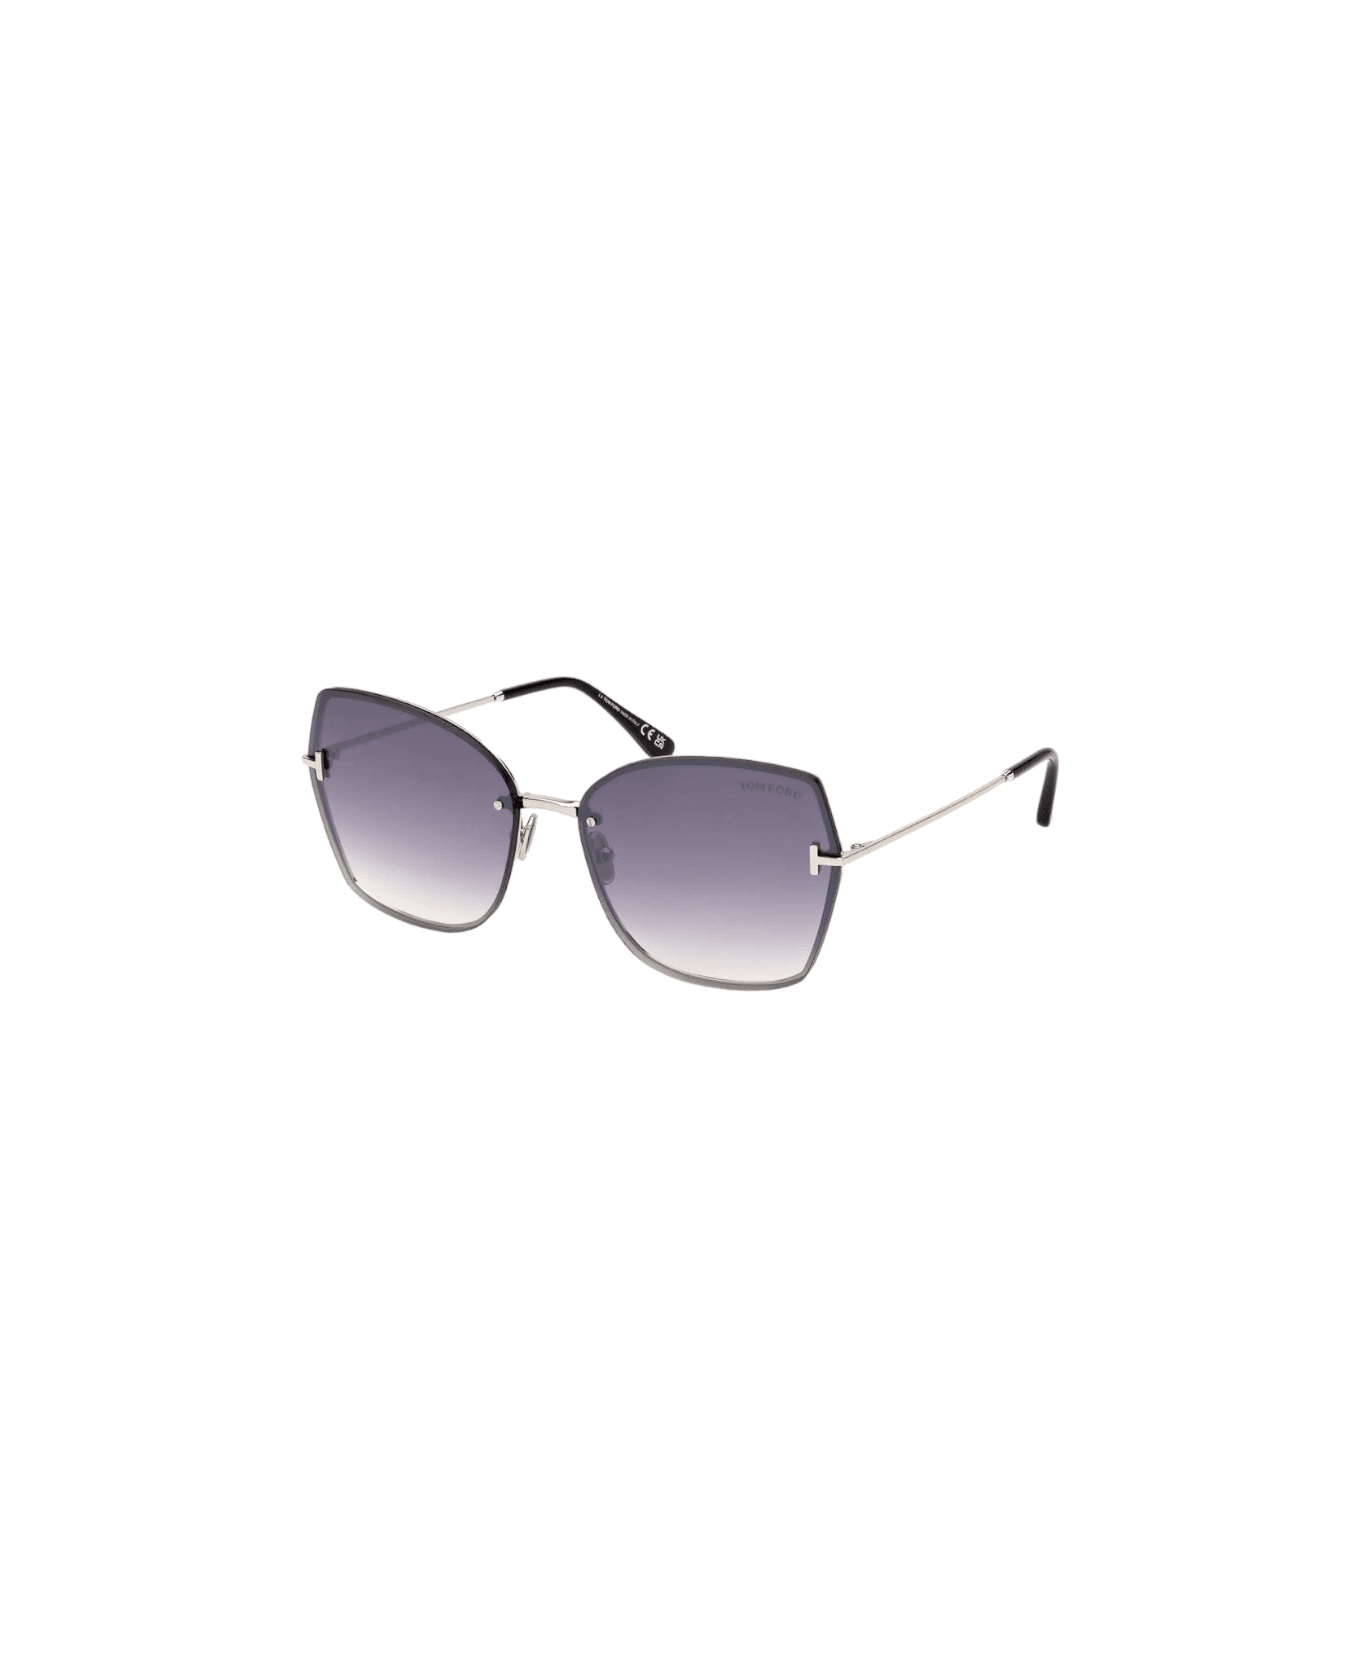 Tom Ford Eyewear Nickie - Ft 1107 /s Sunglasses サングラス